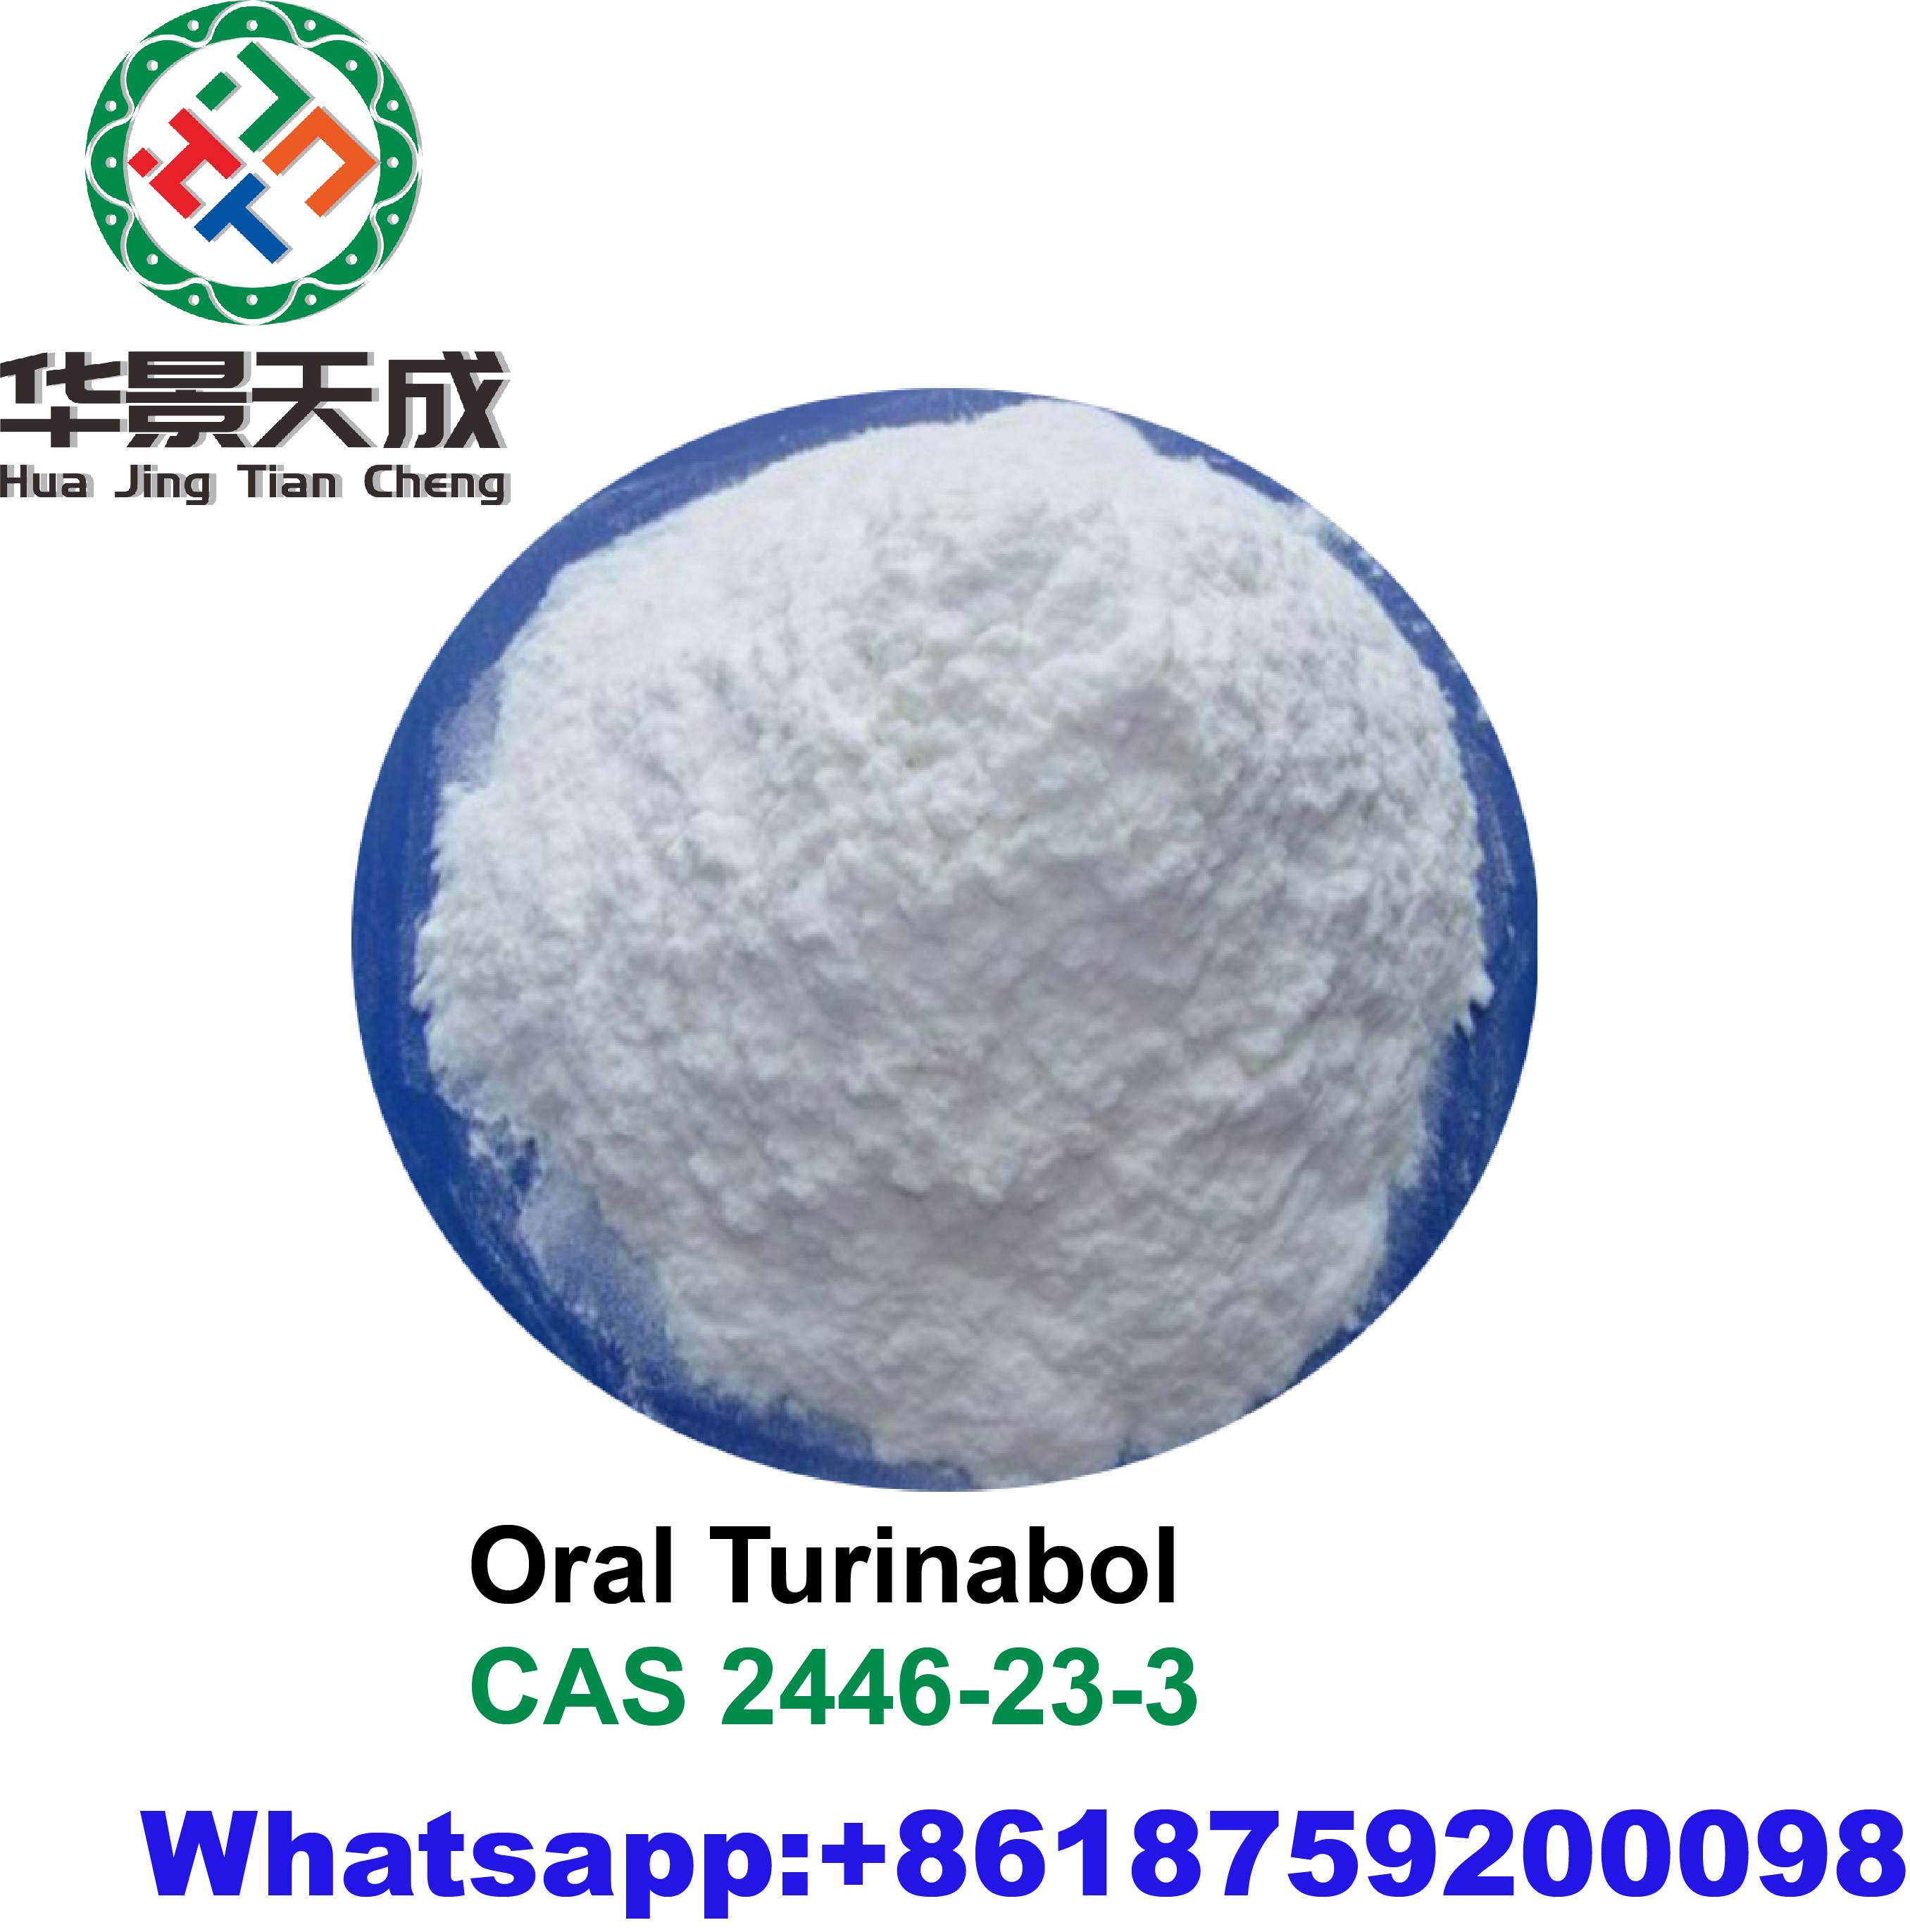 Oral Turinabol10